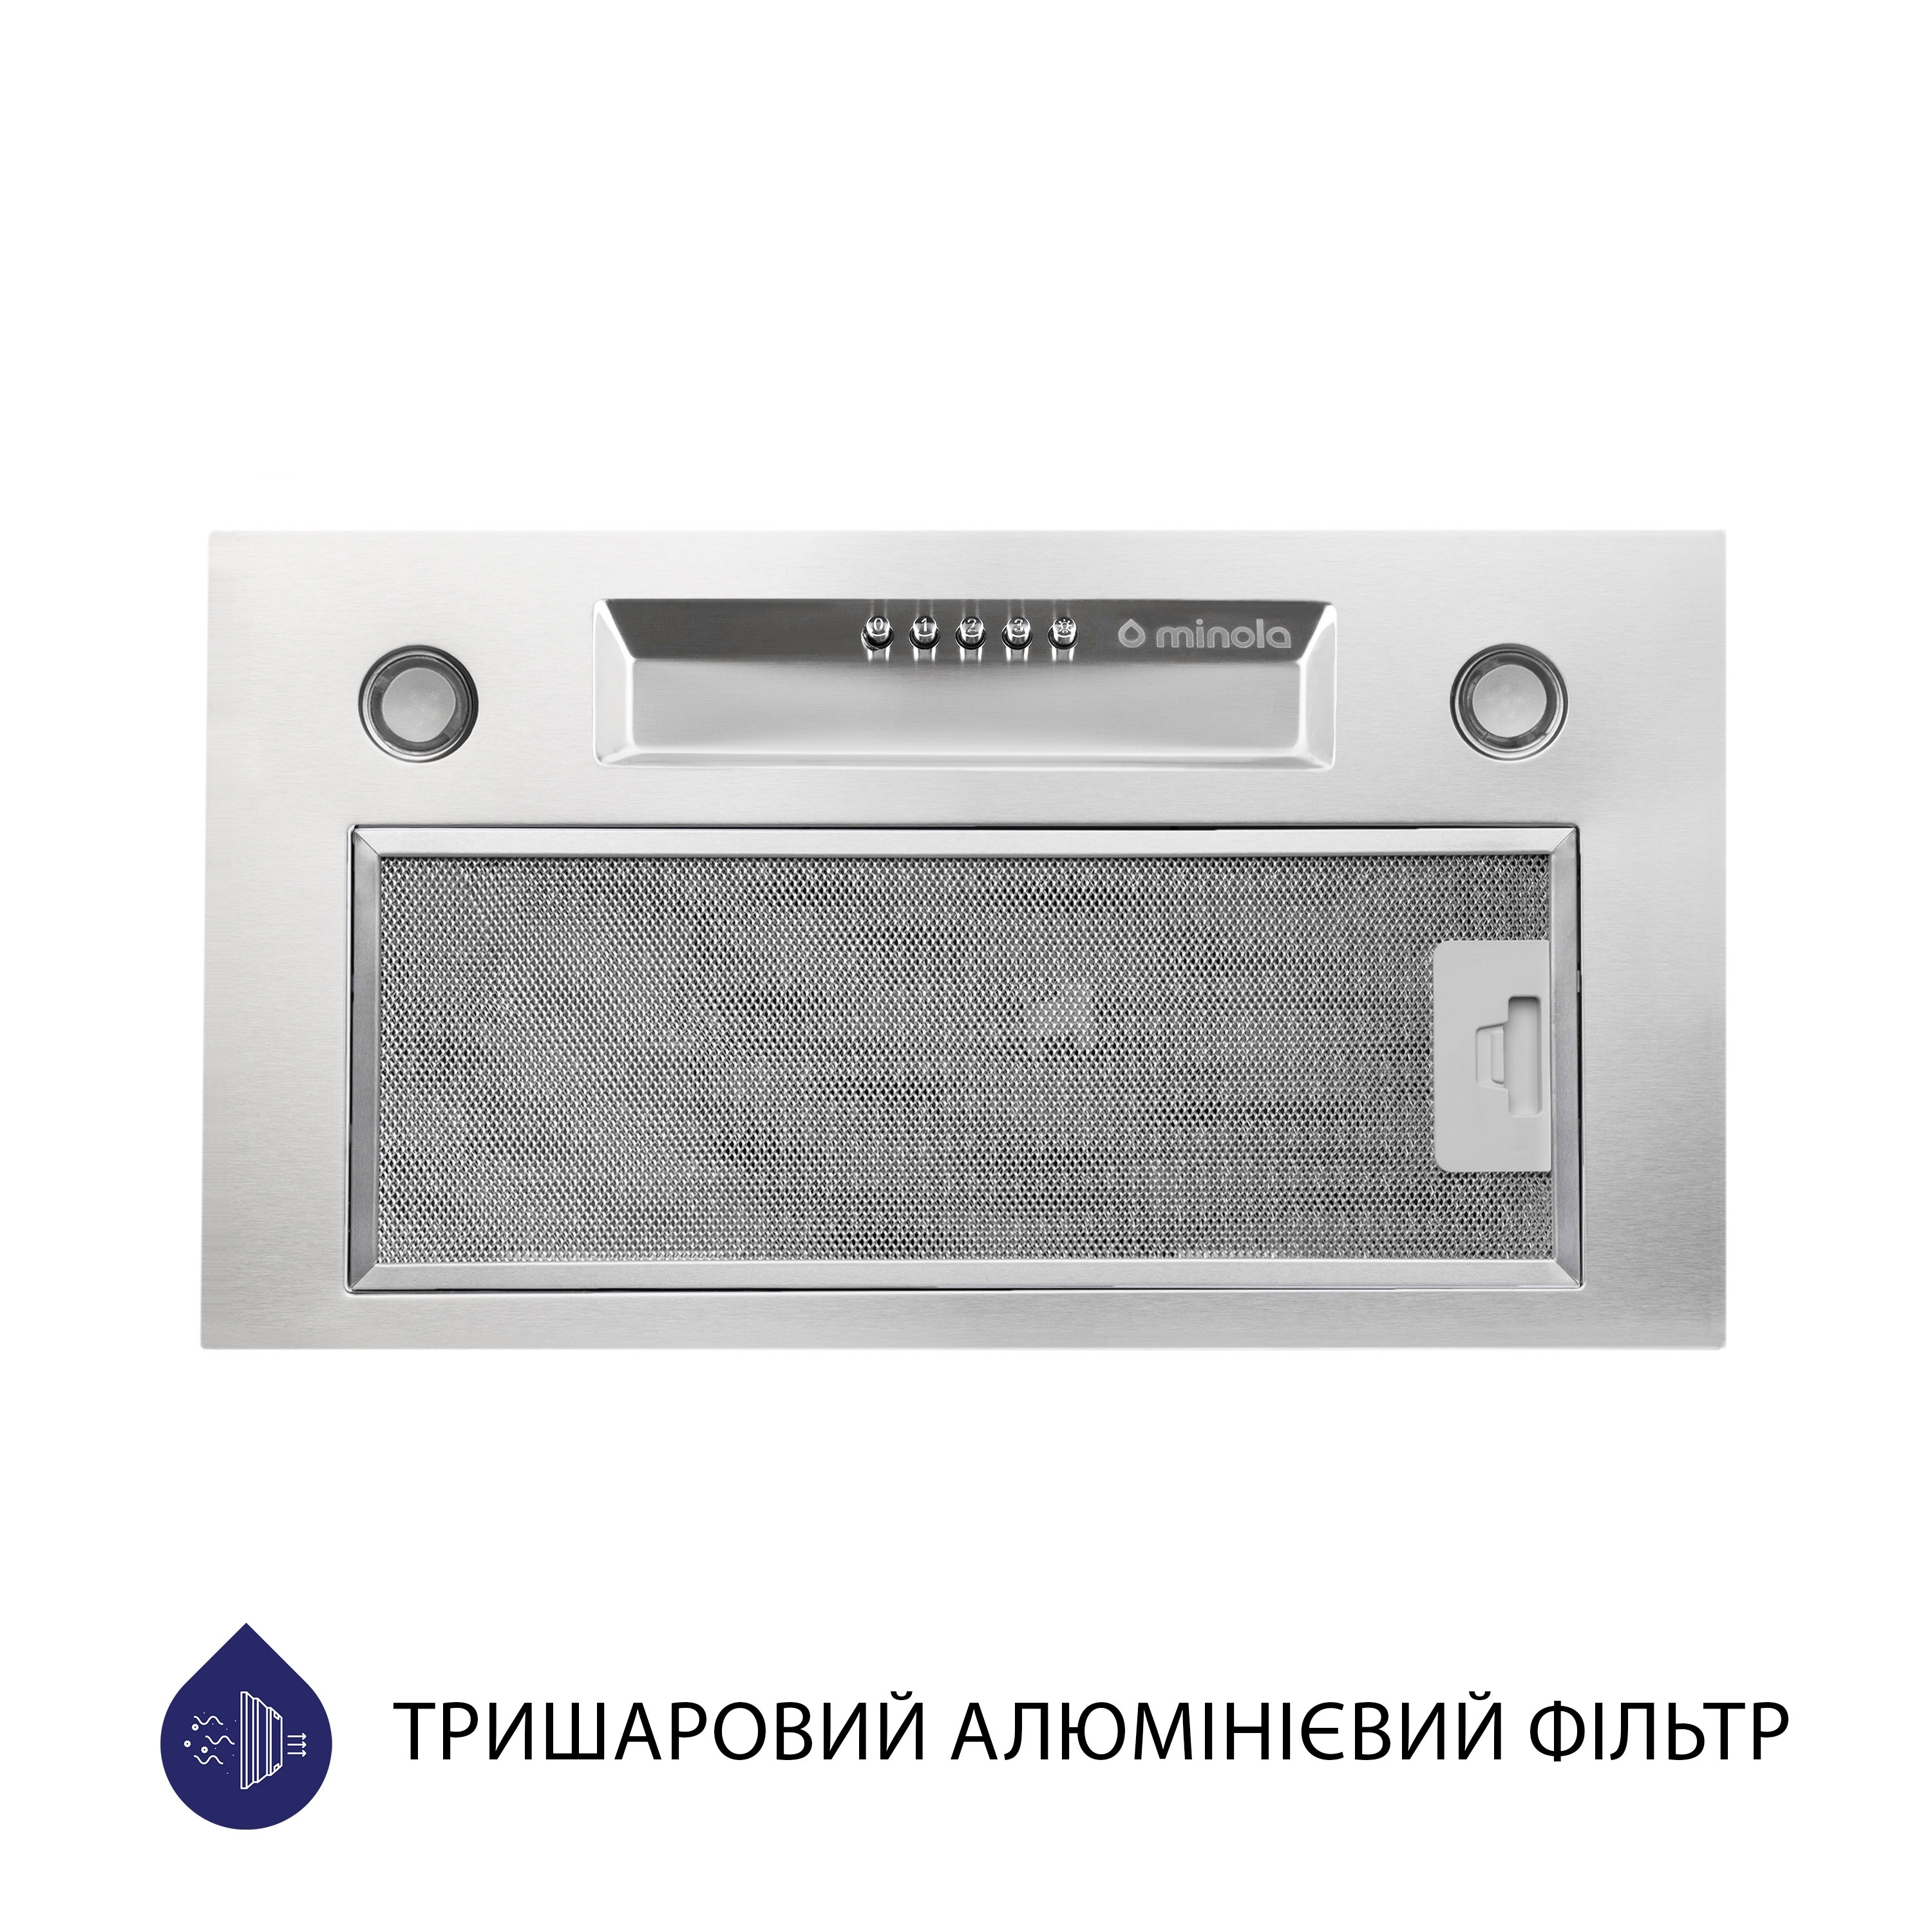 Витяжка кухонная полновстраиваемая Minola HBI 5324 I 800 LED цена 4099 грн - фотография 2